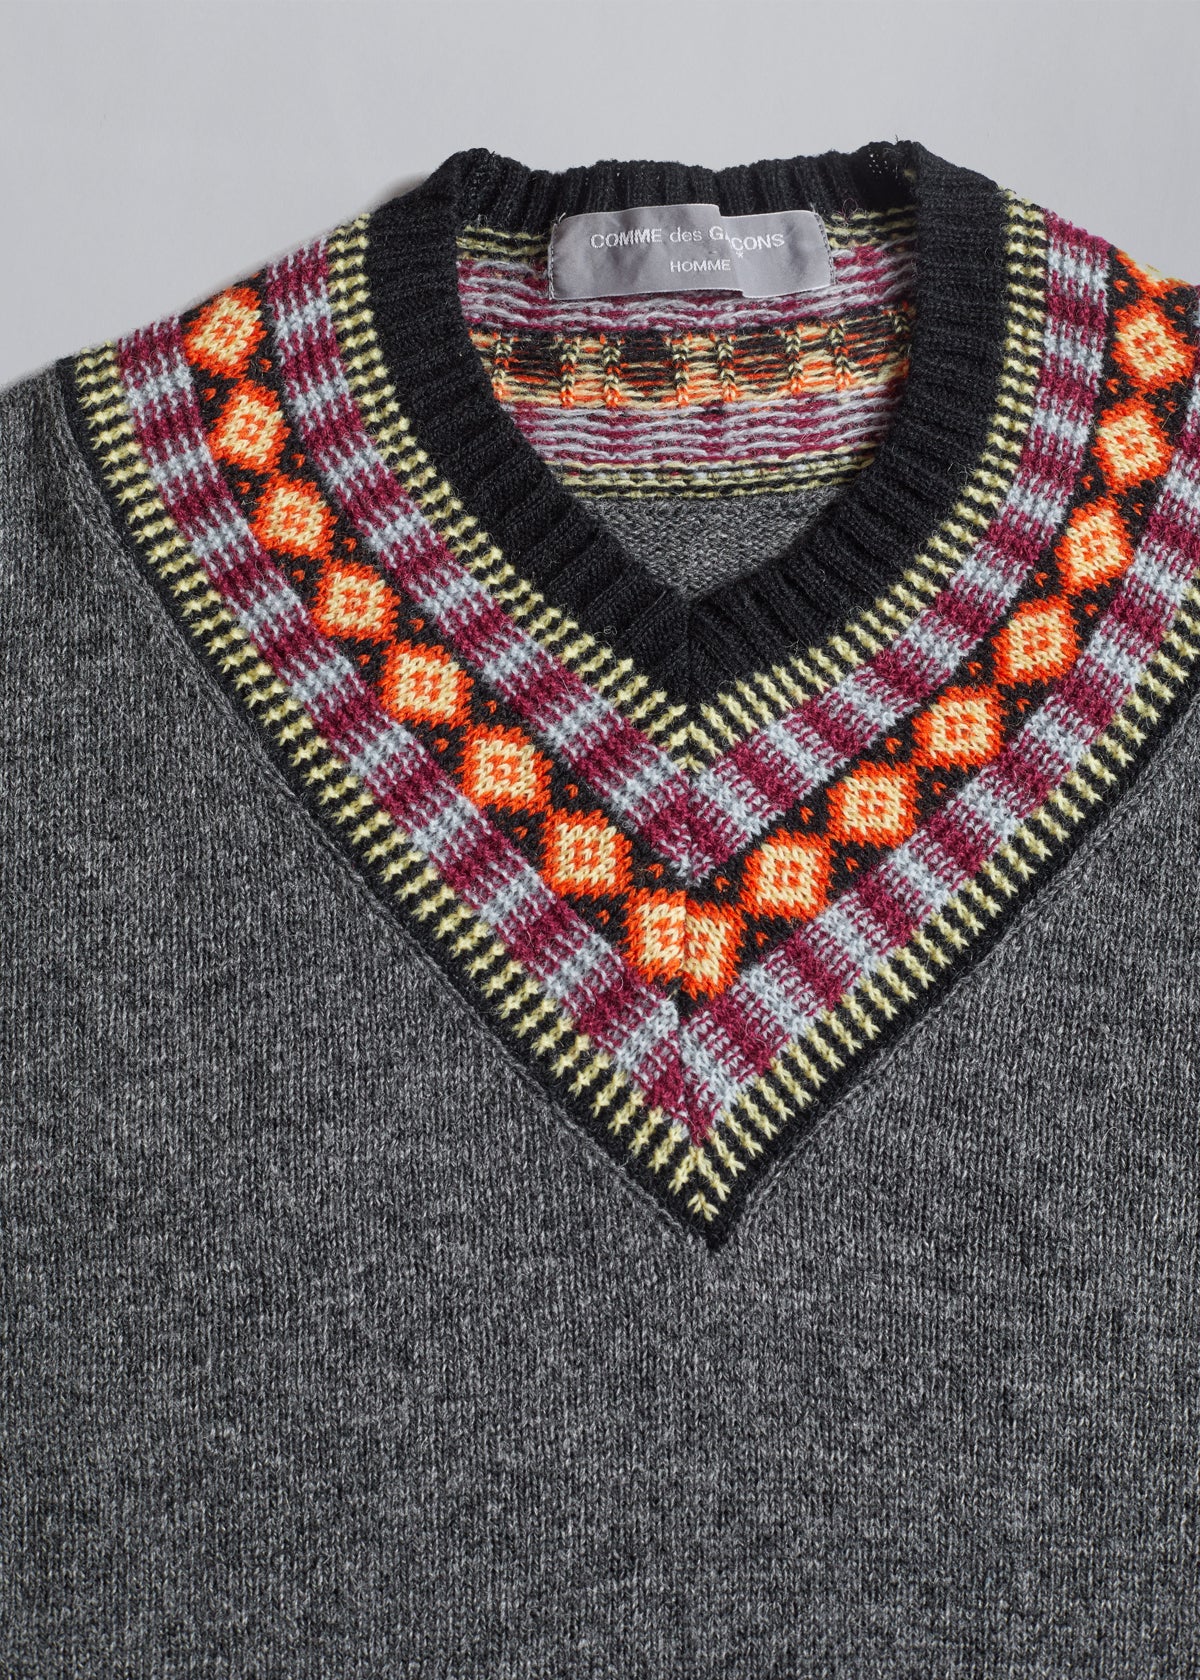 Homme Native Pattern V Neck Knit 2000 - Medium - The Archivist Store